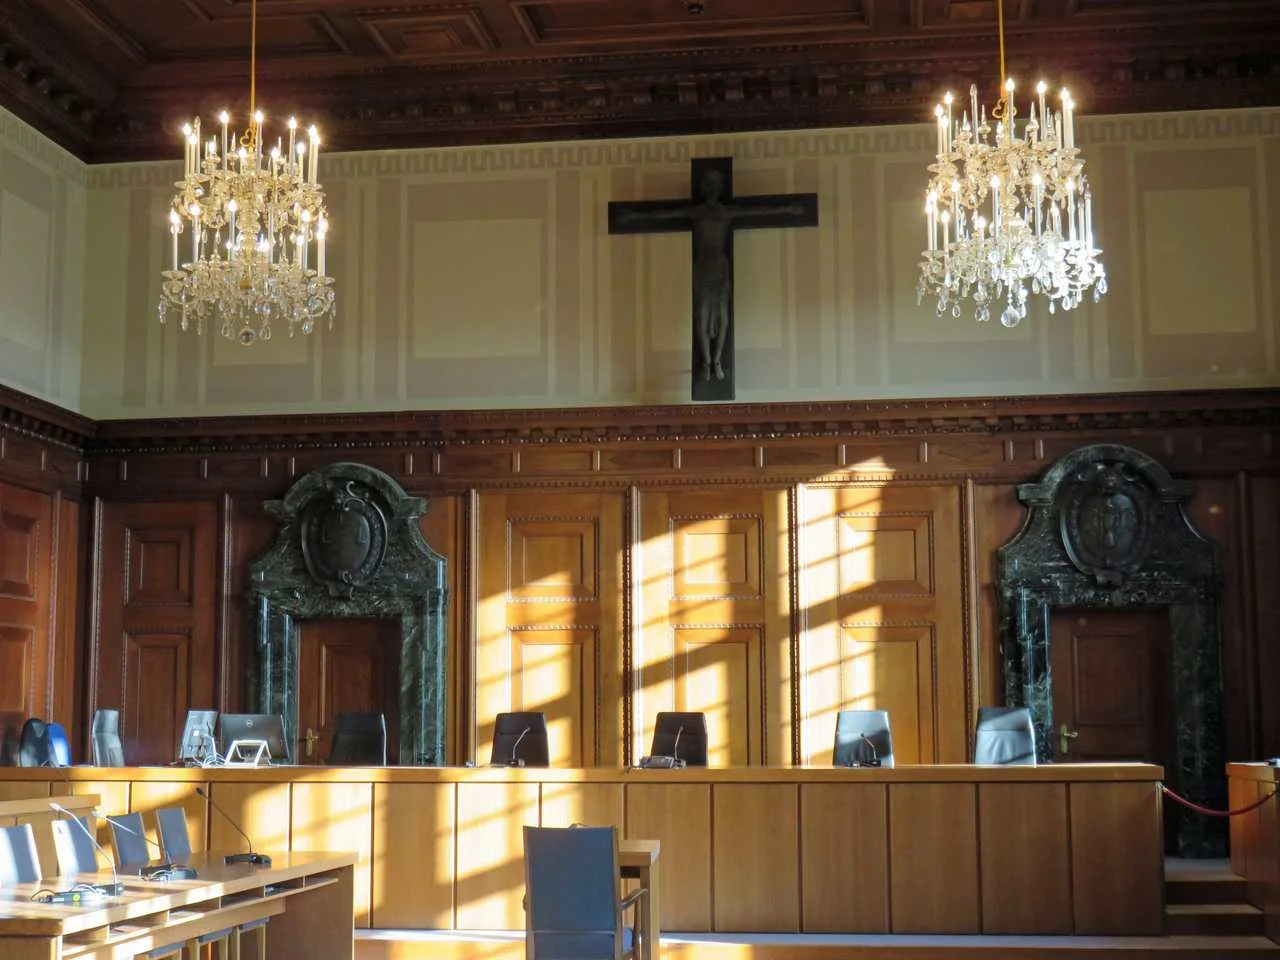 Panel court room